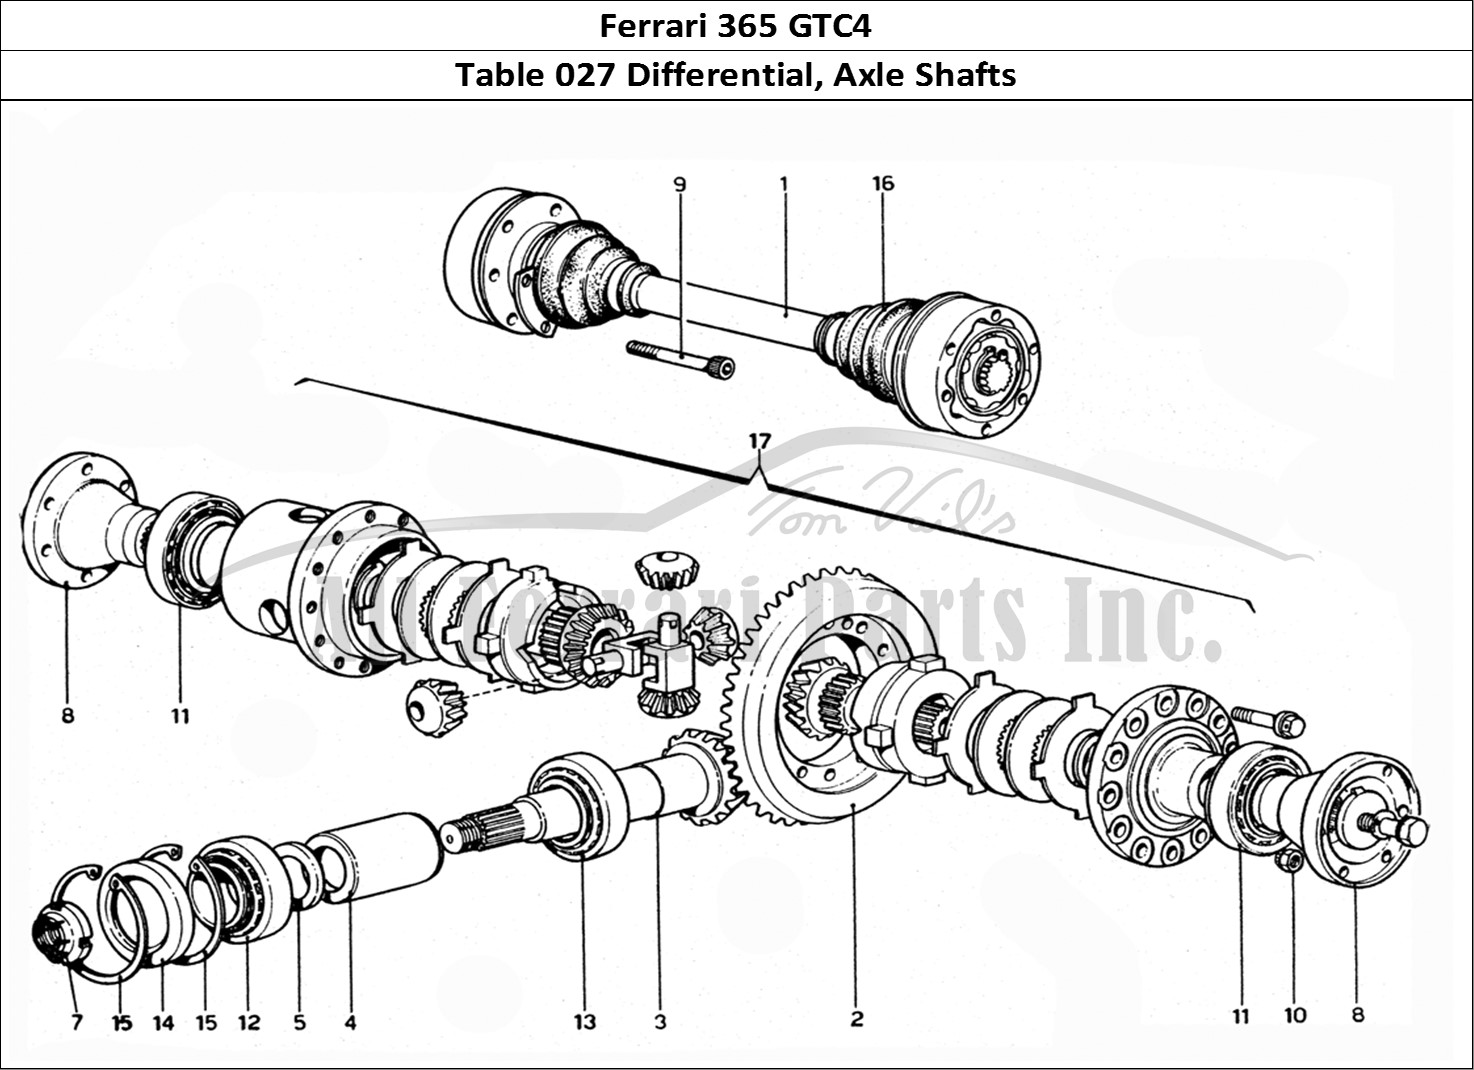 Ferrari Parts Ferrari 365 GTC4 (Mechanical) Page 027 Diff unit